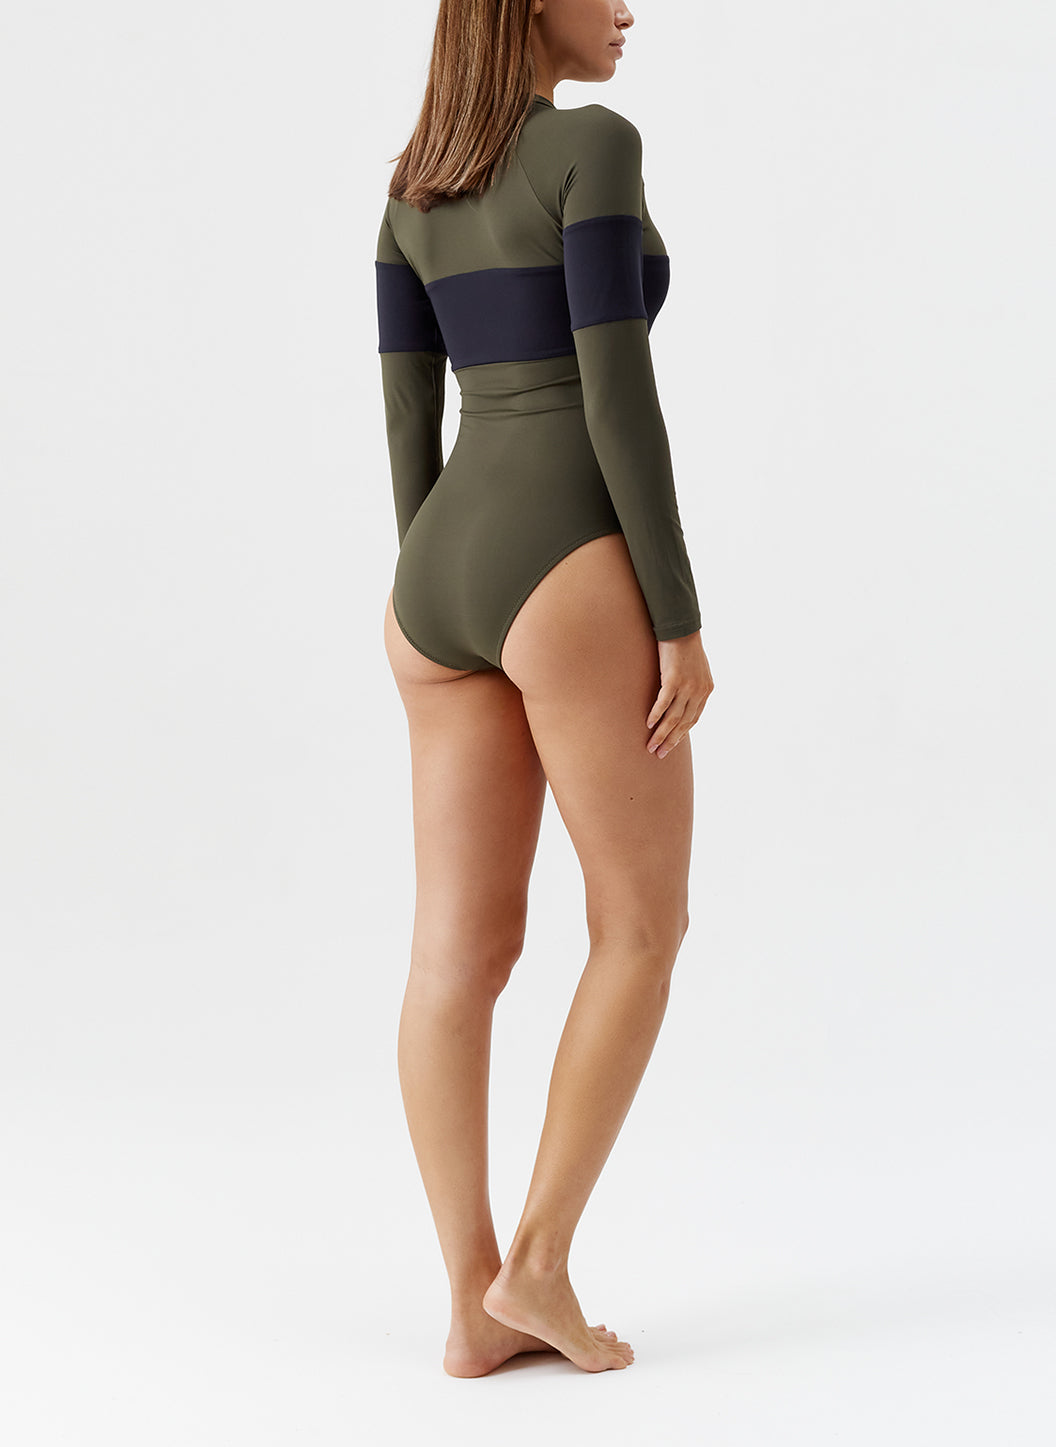 Sandiego_olive_swimsuit_model_2024_B_